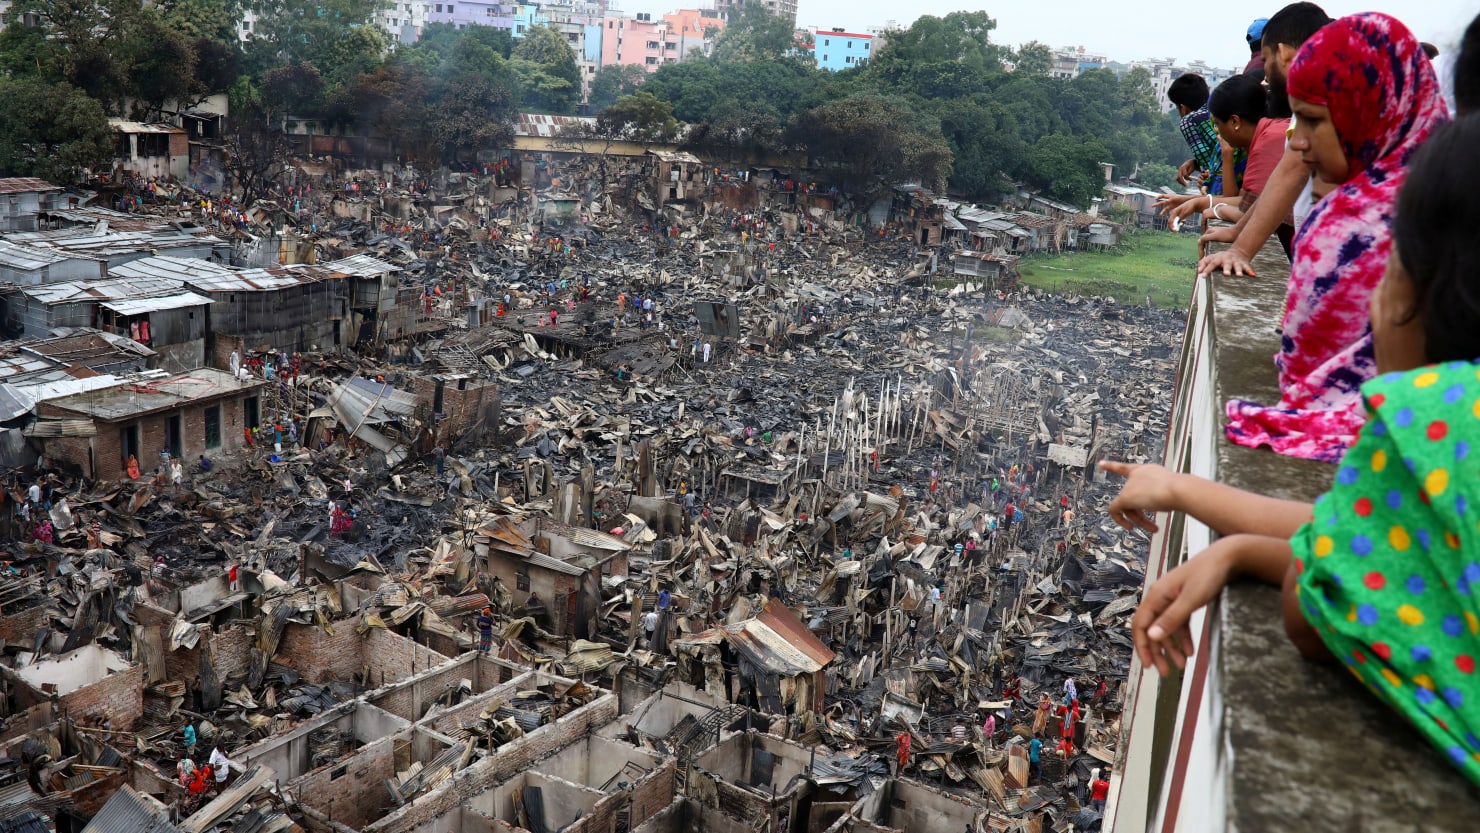 10,000 People Left Homeless After Fire Guts Dhaka, Bangladesh, Shantytown1480 x 833